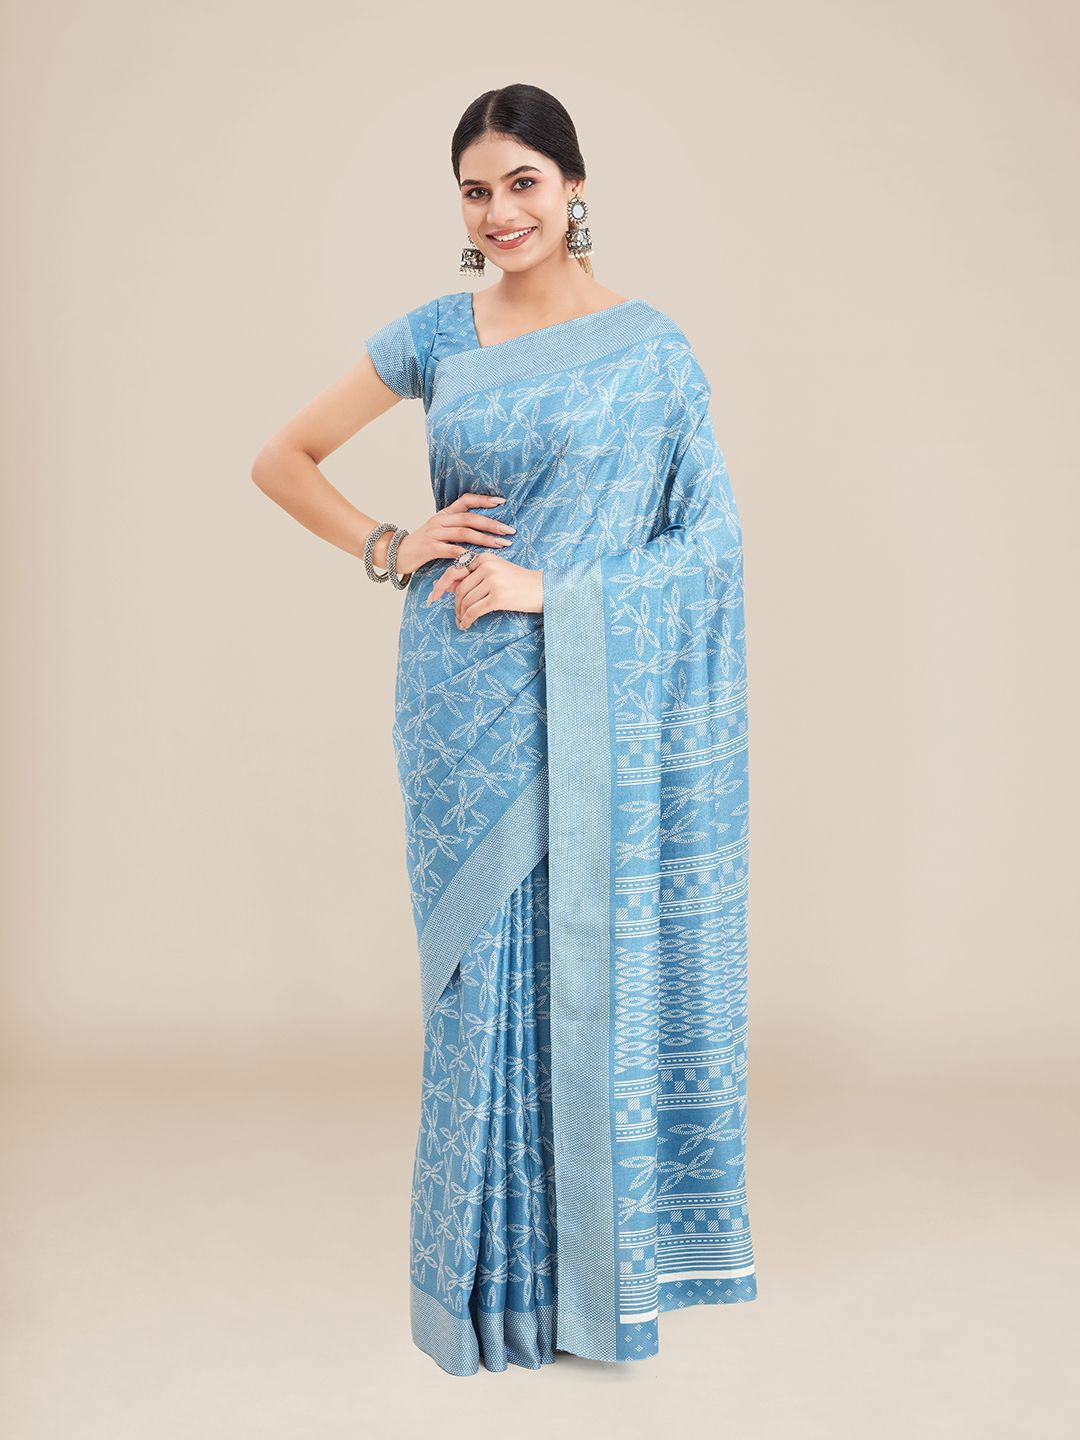 Kalyan Silks Blue & White Saree Price in India